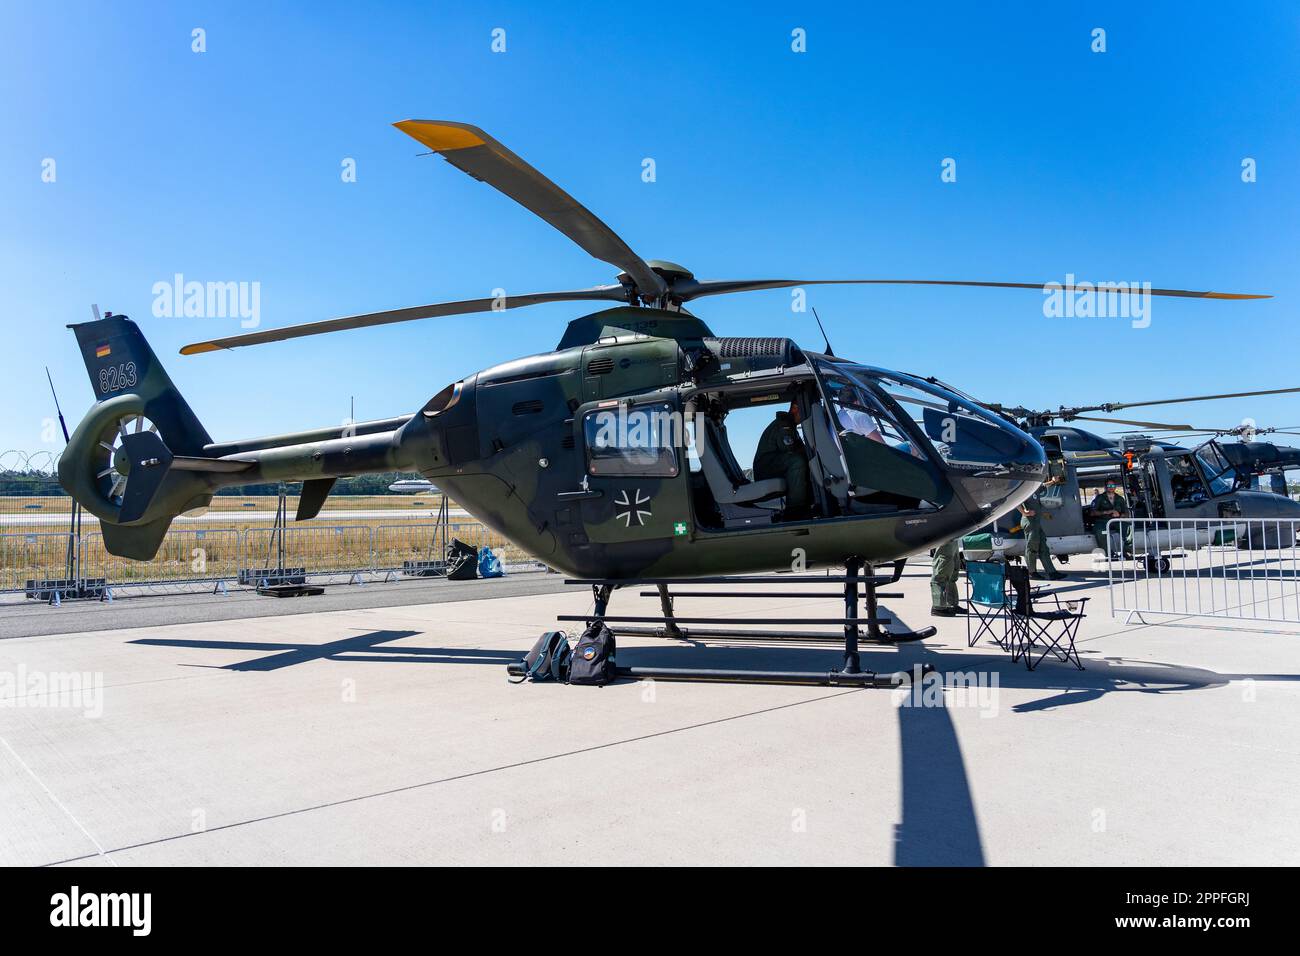 BERLIN, ALLEMAGNE - 23 JUIN 2022 : hélicoptère bimoteur Eurocopter EC135 T1 (aujourd'hui Airbus Helicopters H135). Exposition ILA Berlin Air Show 2022 Banque D'Images